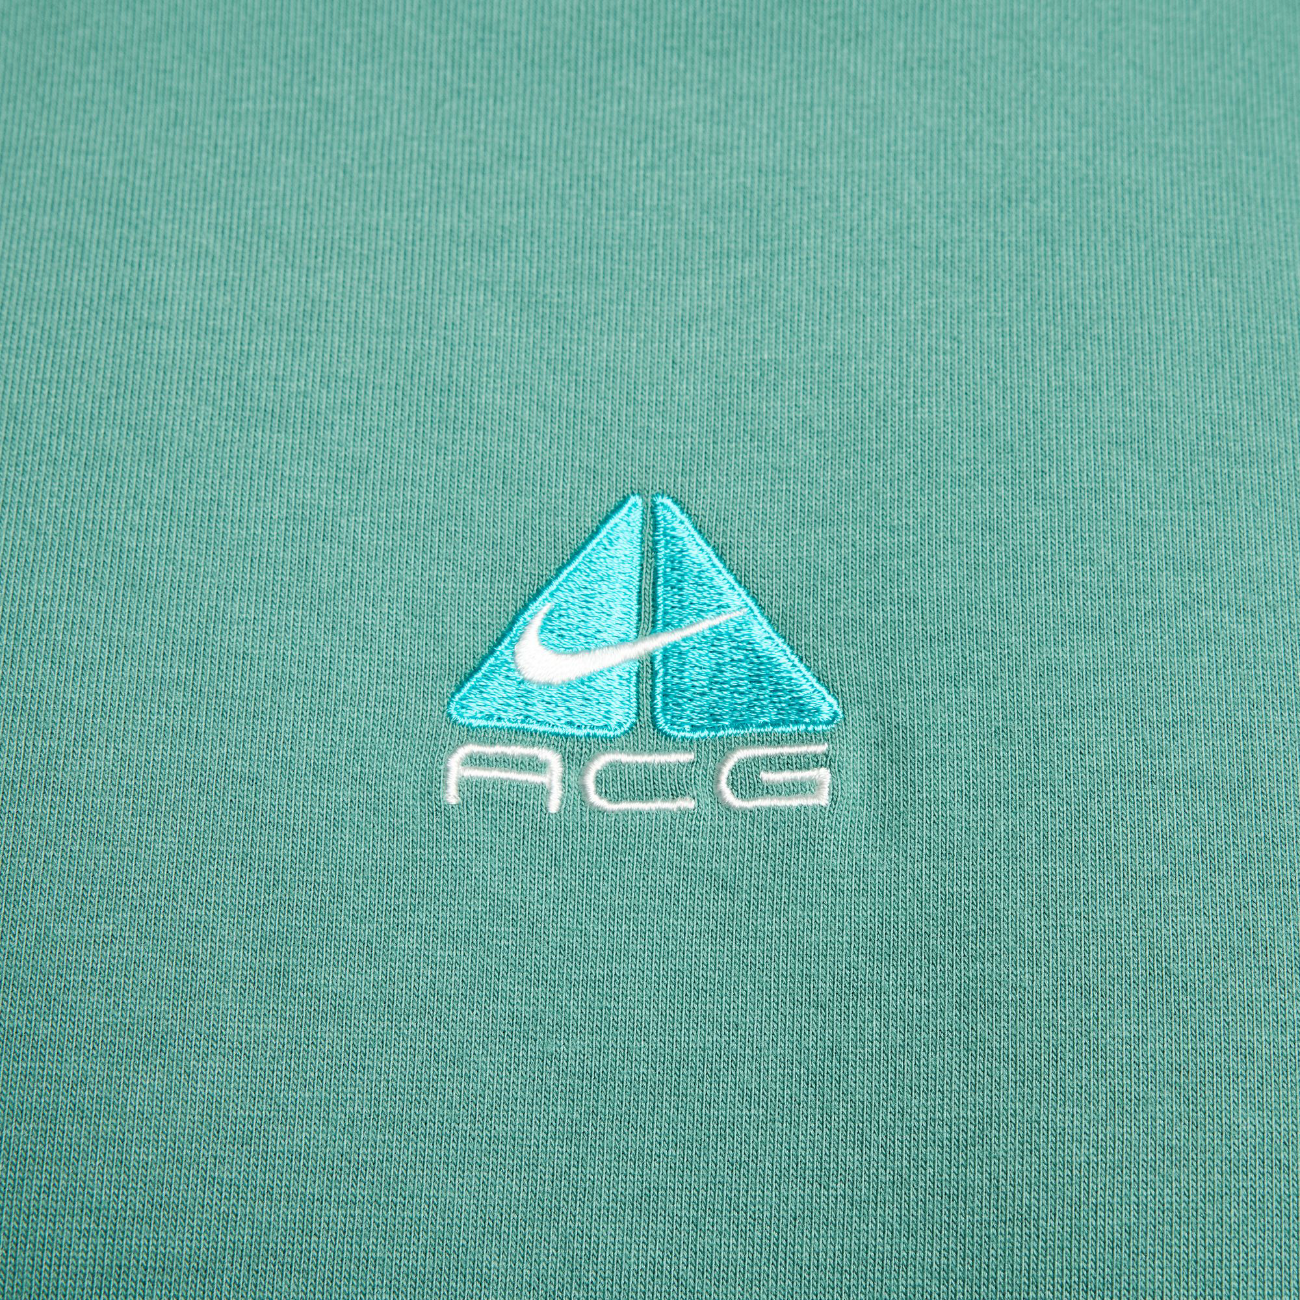 ACG 'Lungs' Short Sleeve Tee - Bicoastal